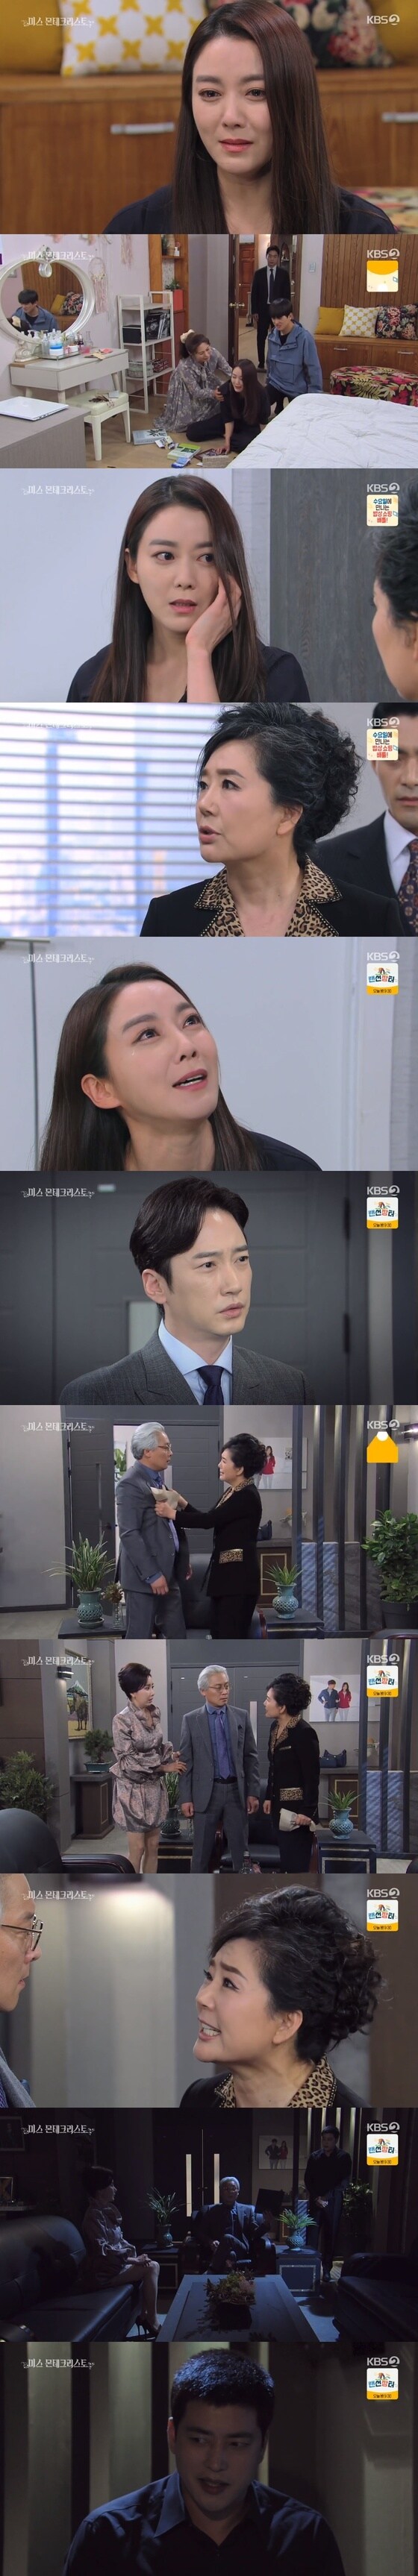 KBS 2TV '미스 몬테크리스토' 캡처 © 뉴스1